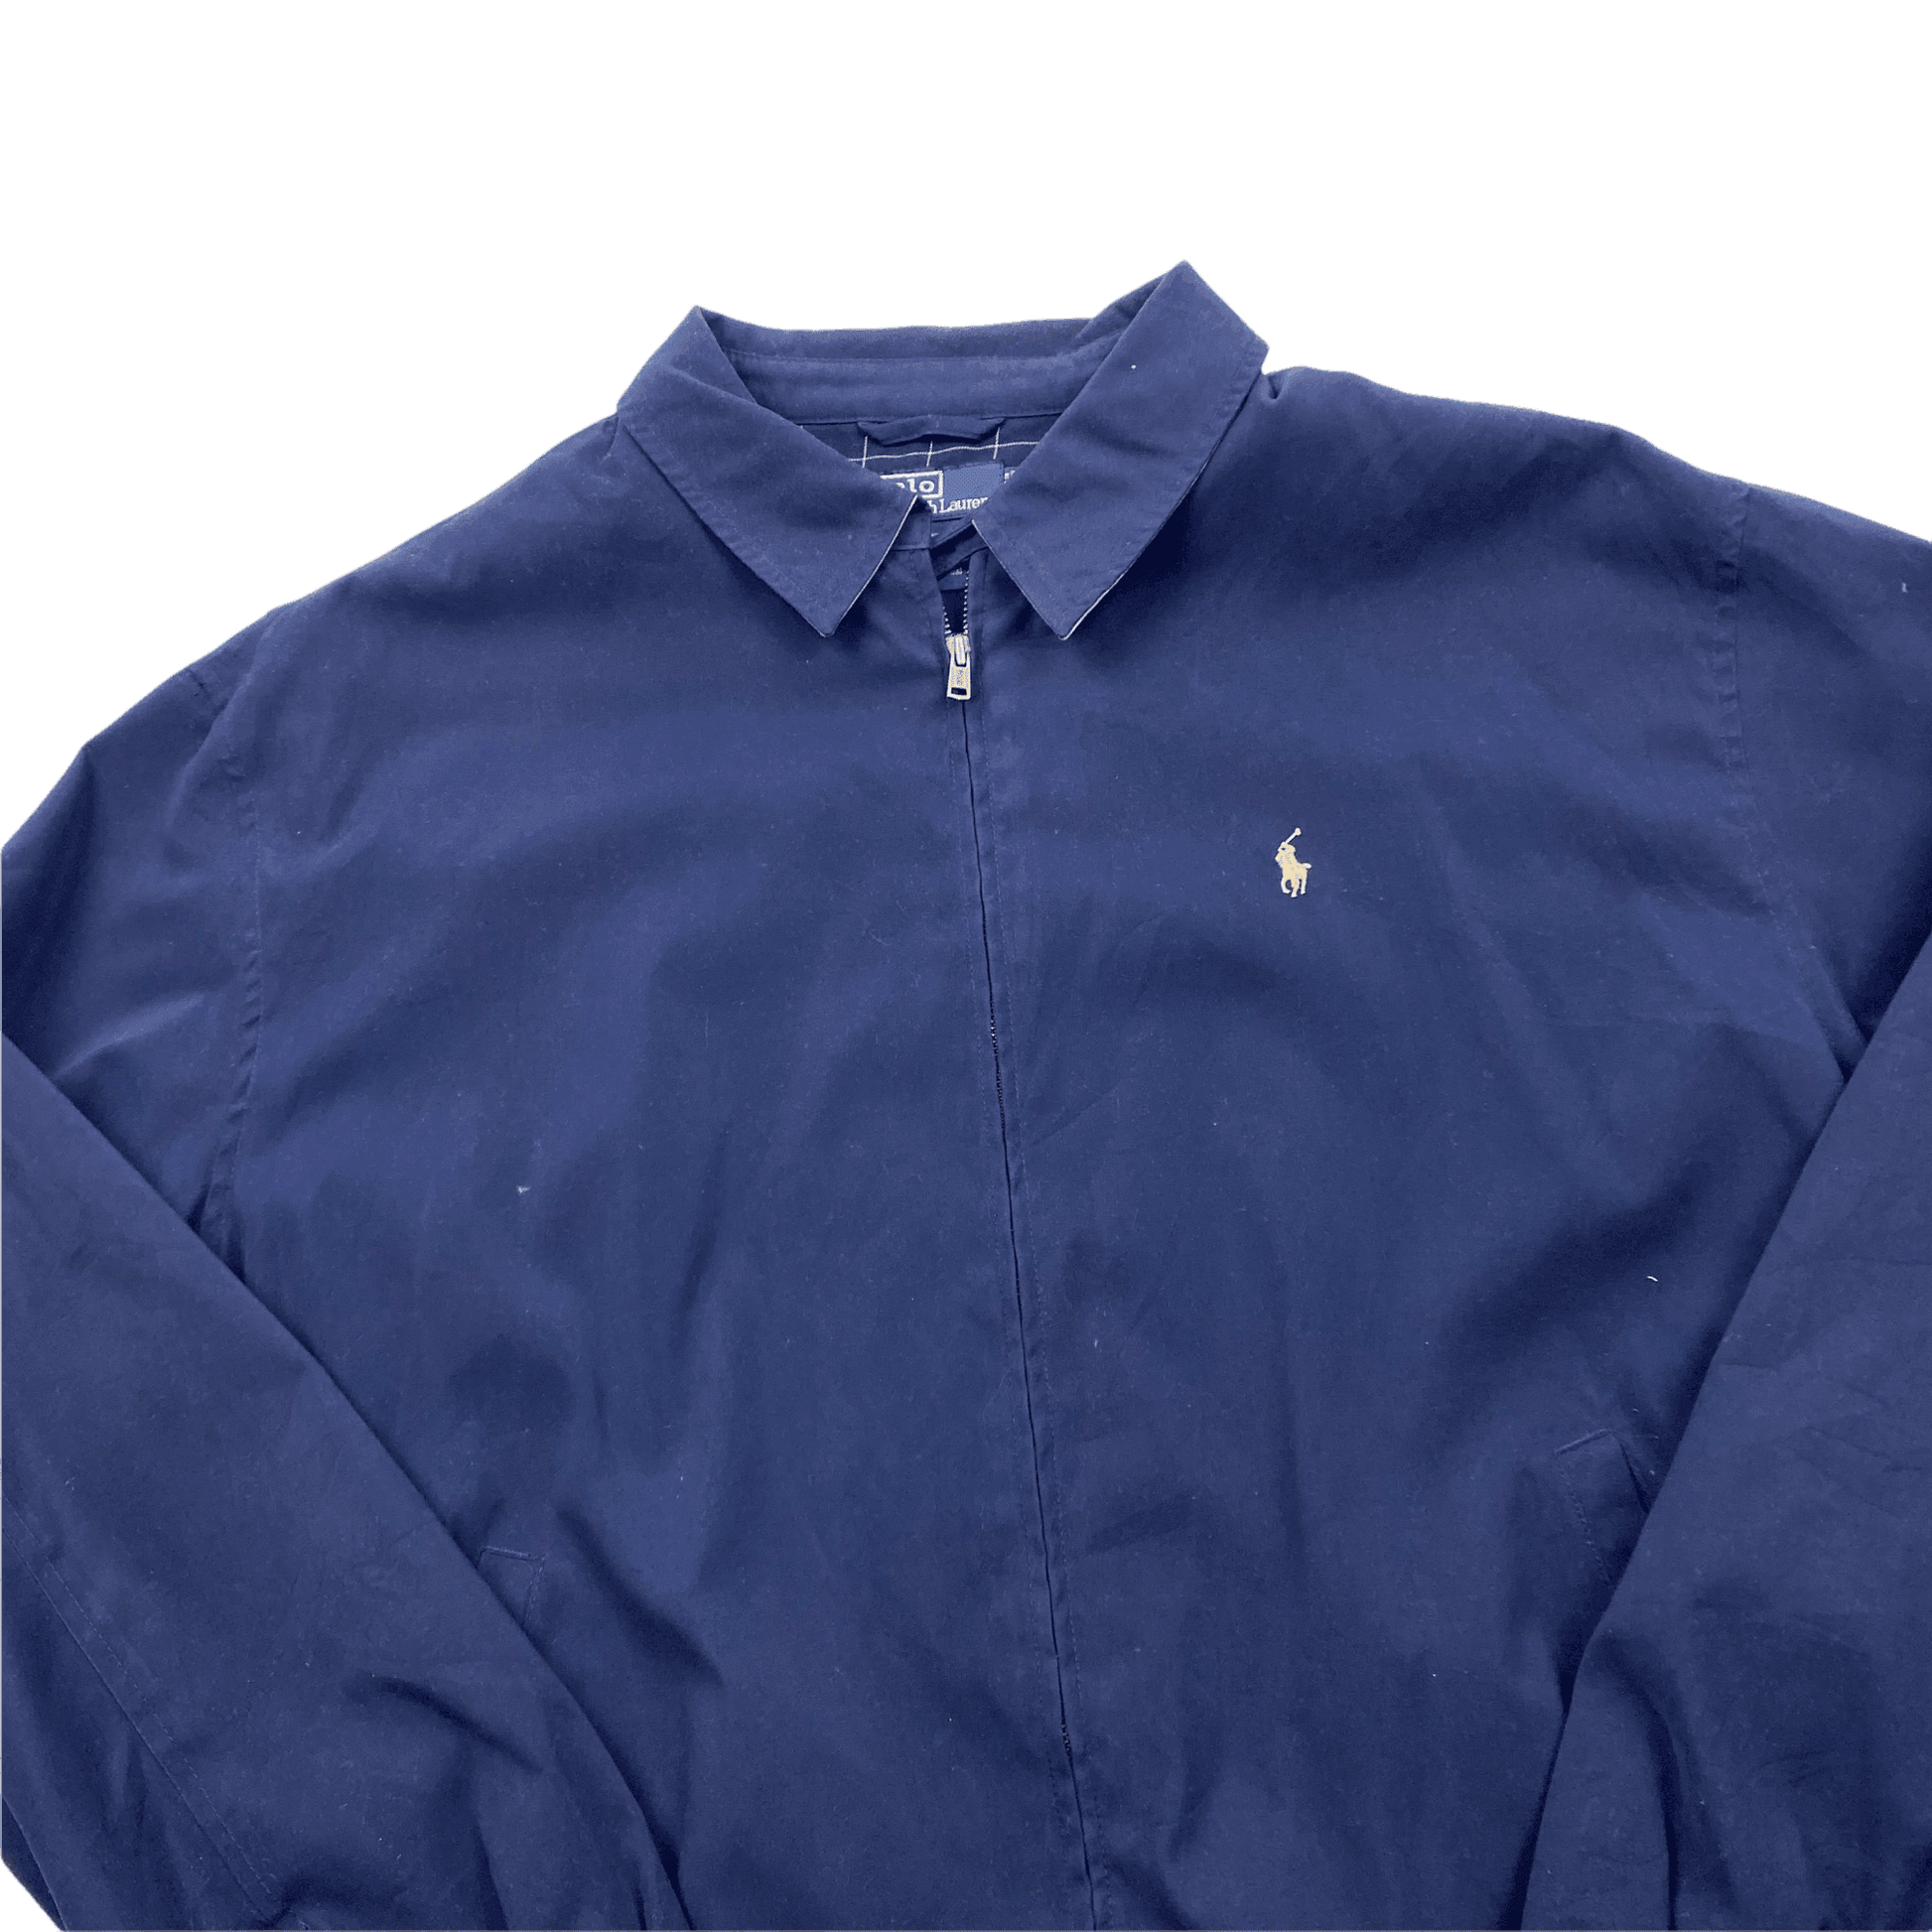 Vintage Navy Blue Polo Ralph Lauren Harrington Jacket - XXL (Recommended Size - Extra Large) - The Streetwear Studio